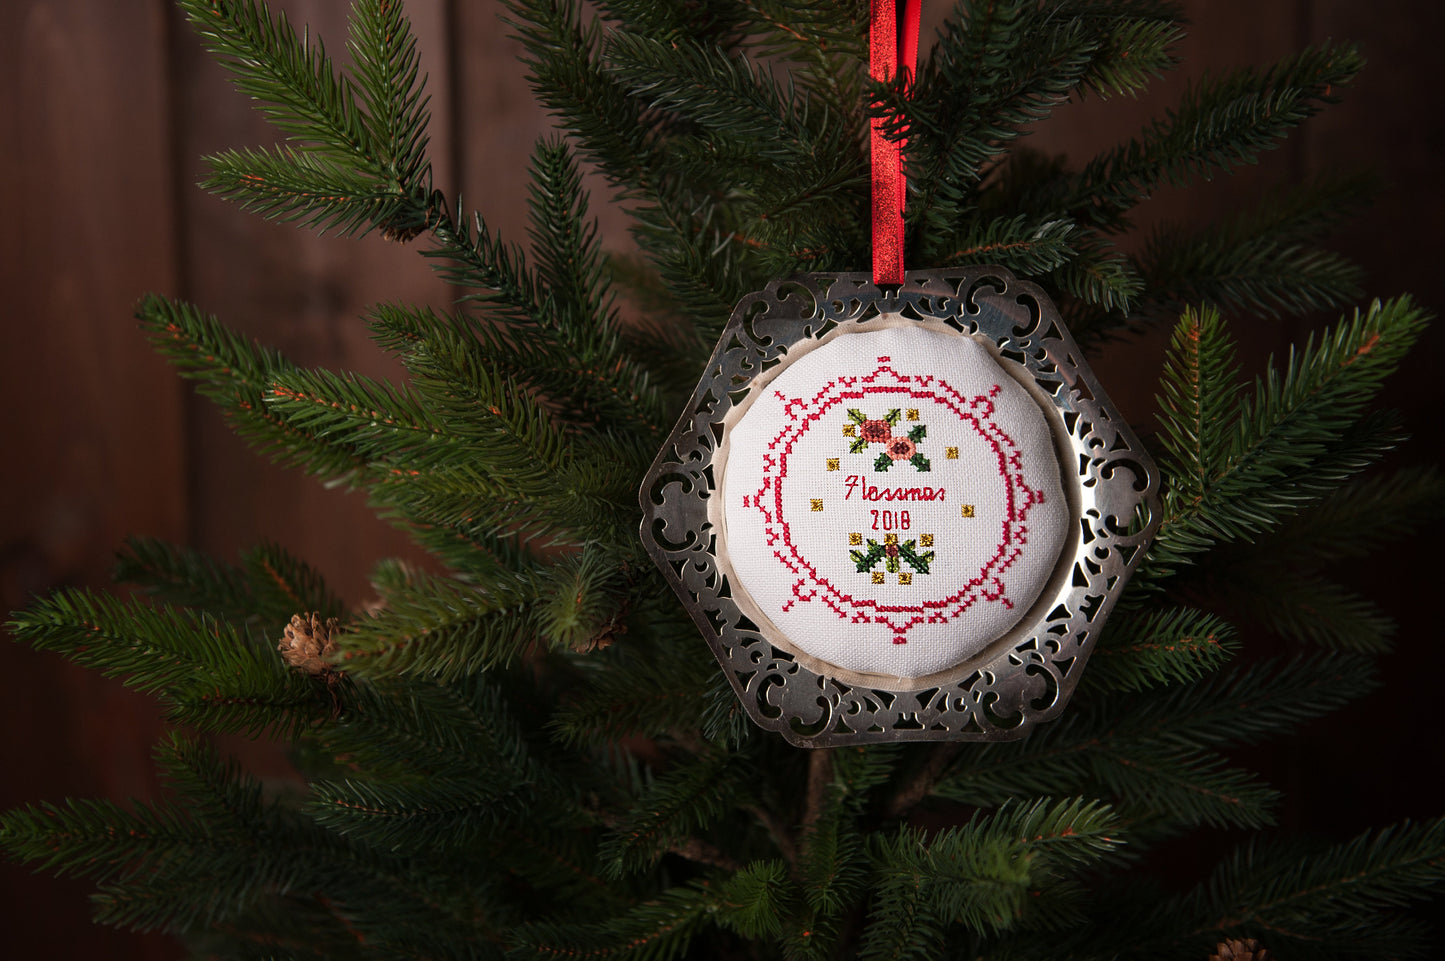 Flossmas Flossukkah 2018 Christmas Ornament